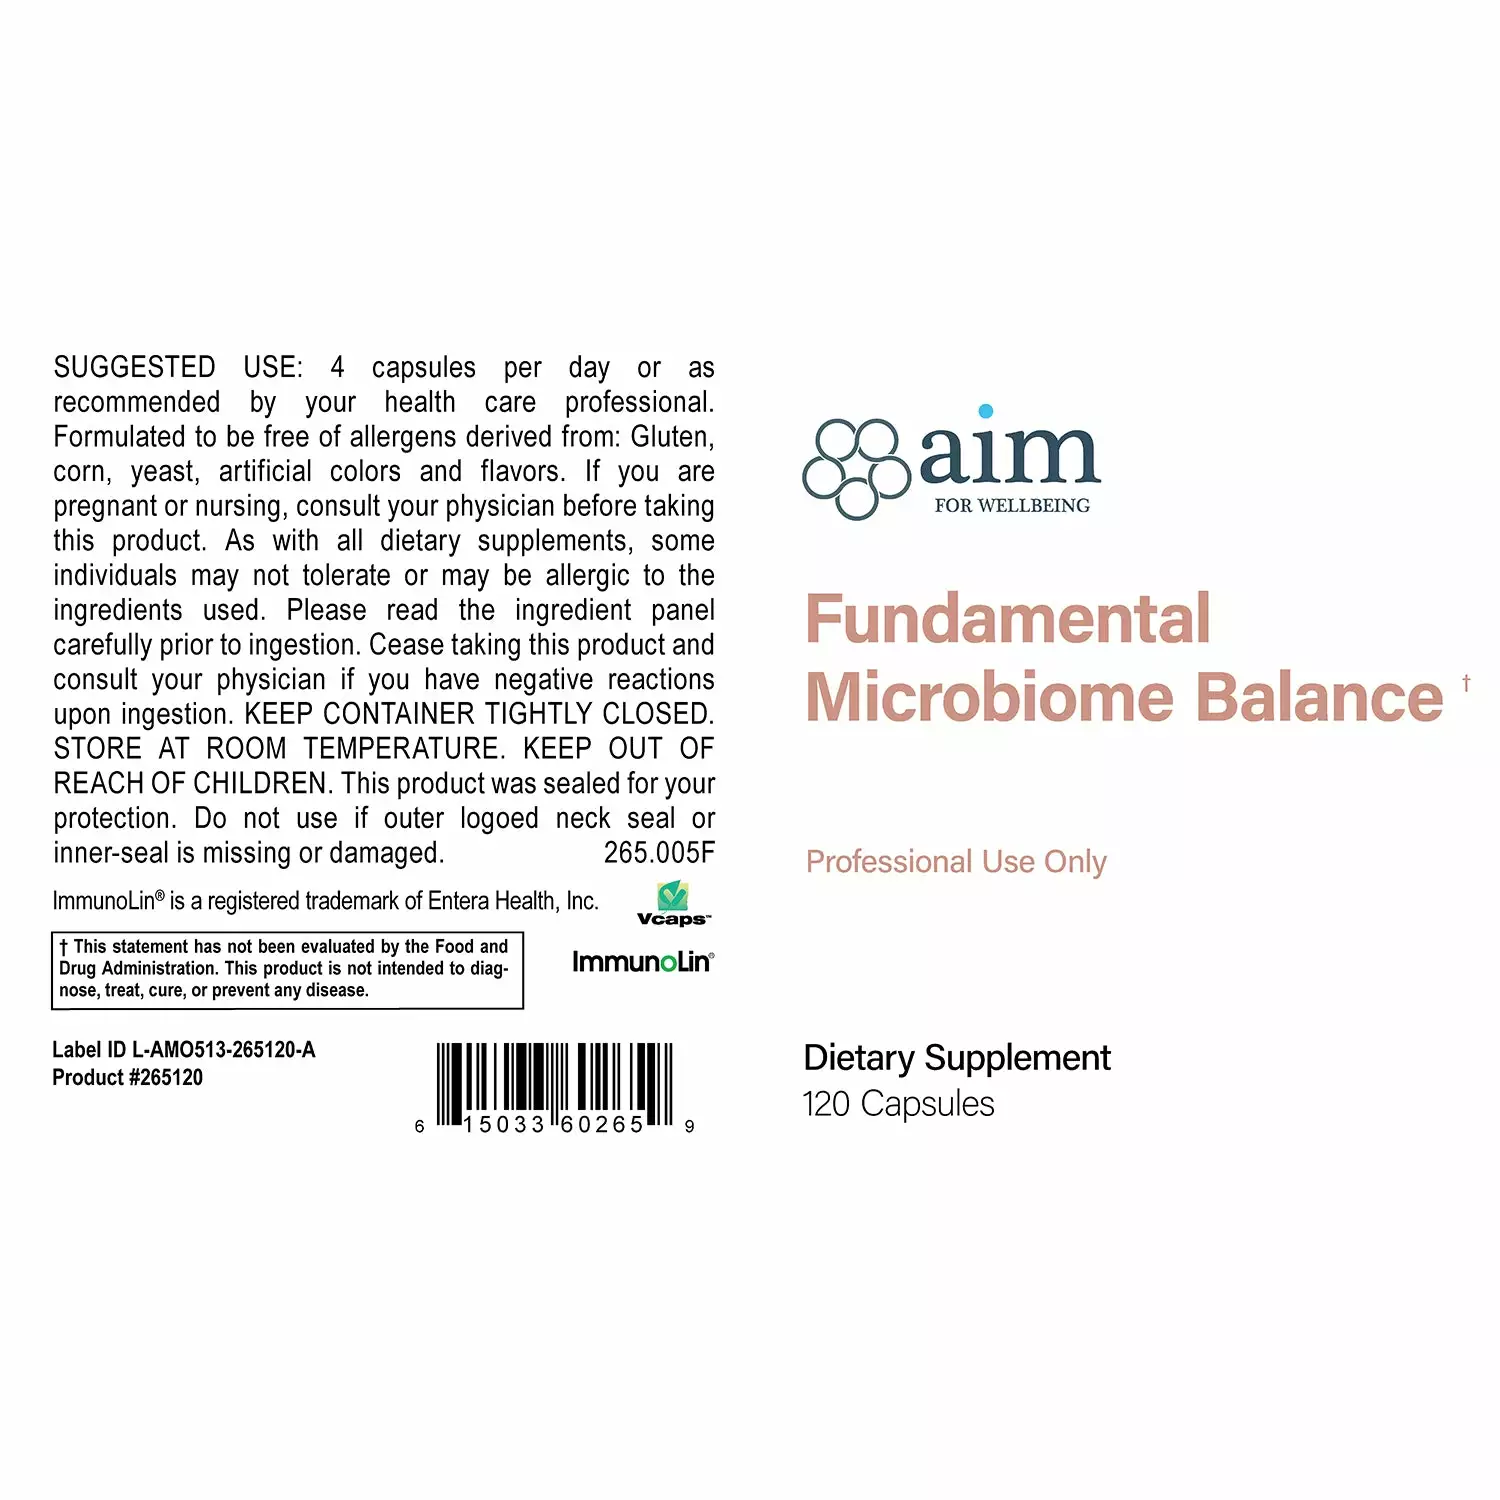 Fundamental Microbiome Balance Capsules